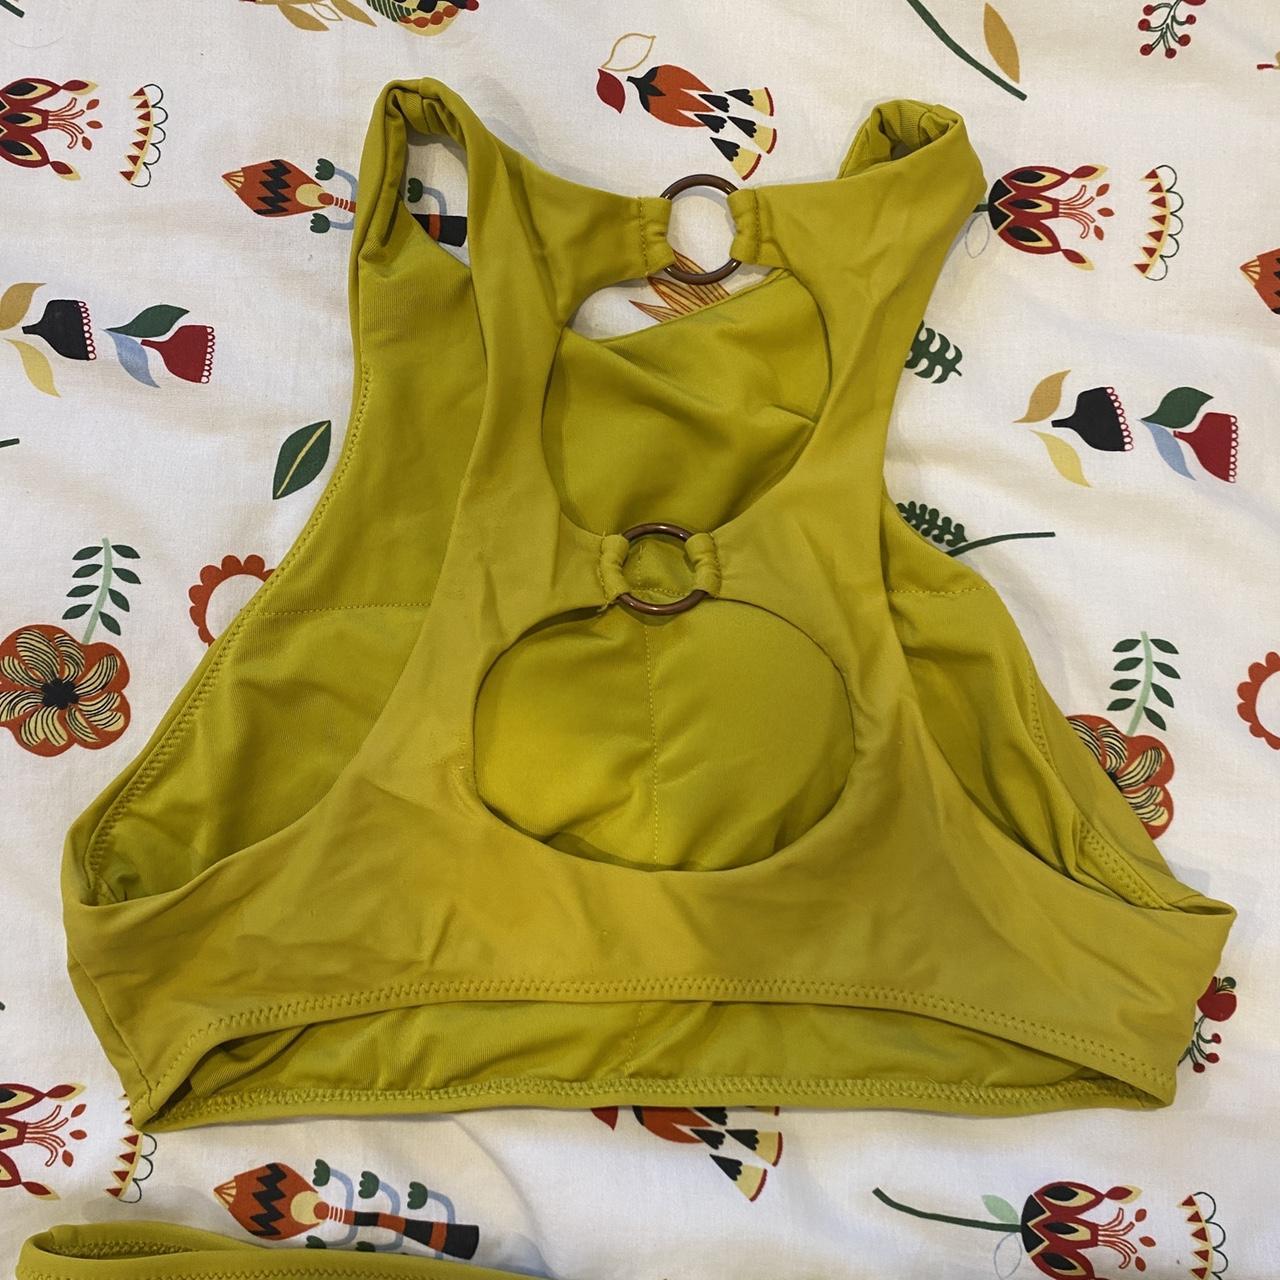 Aries Women's Yellow and Green Bikinis-and-tankini-sets (2)